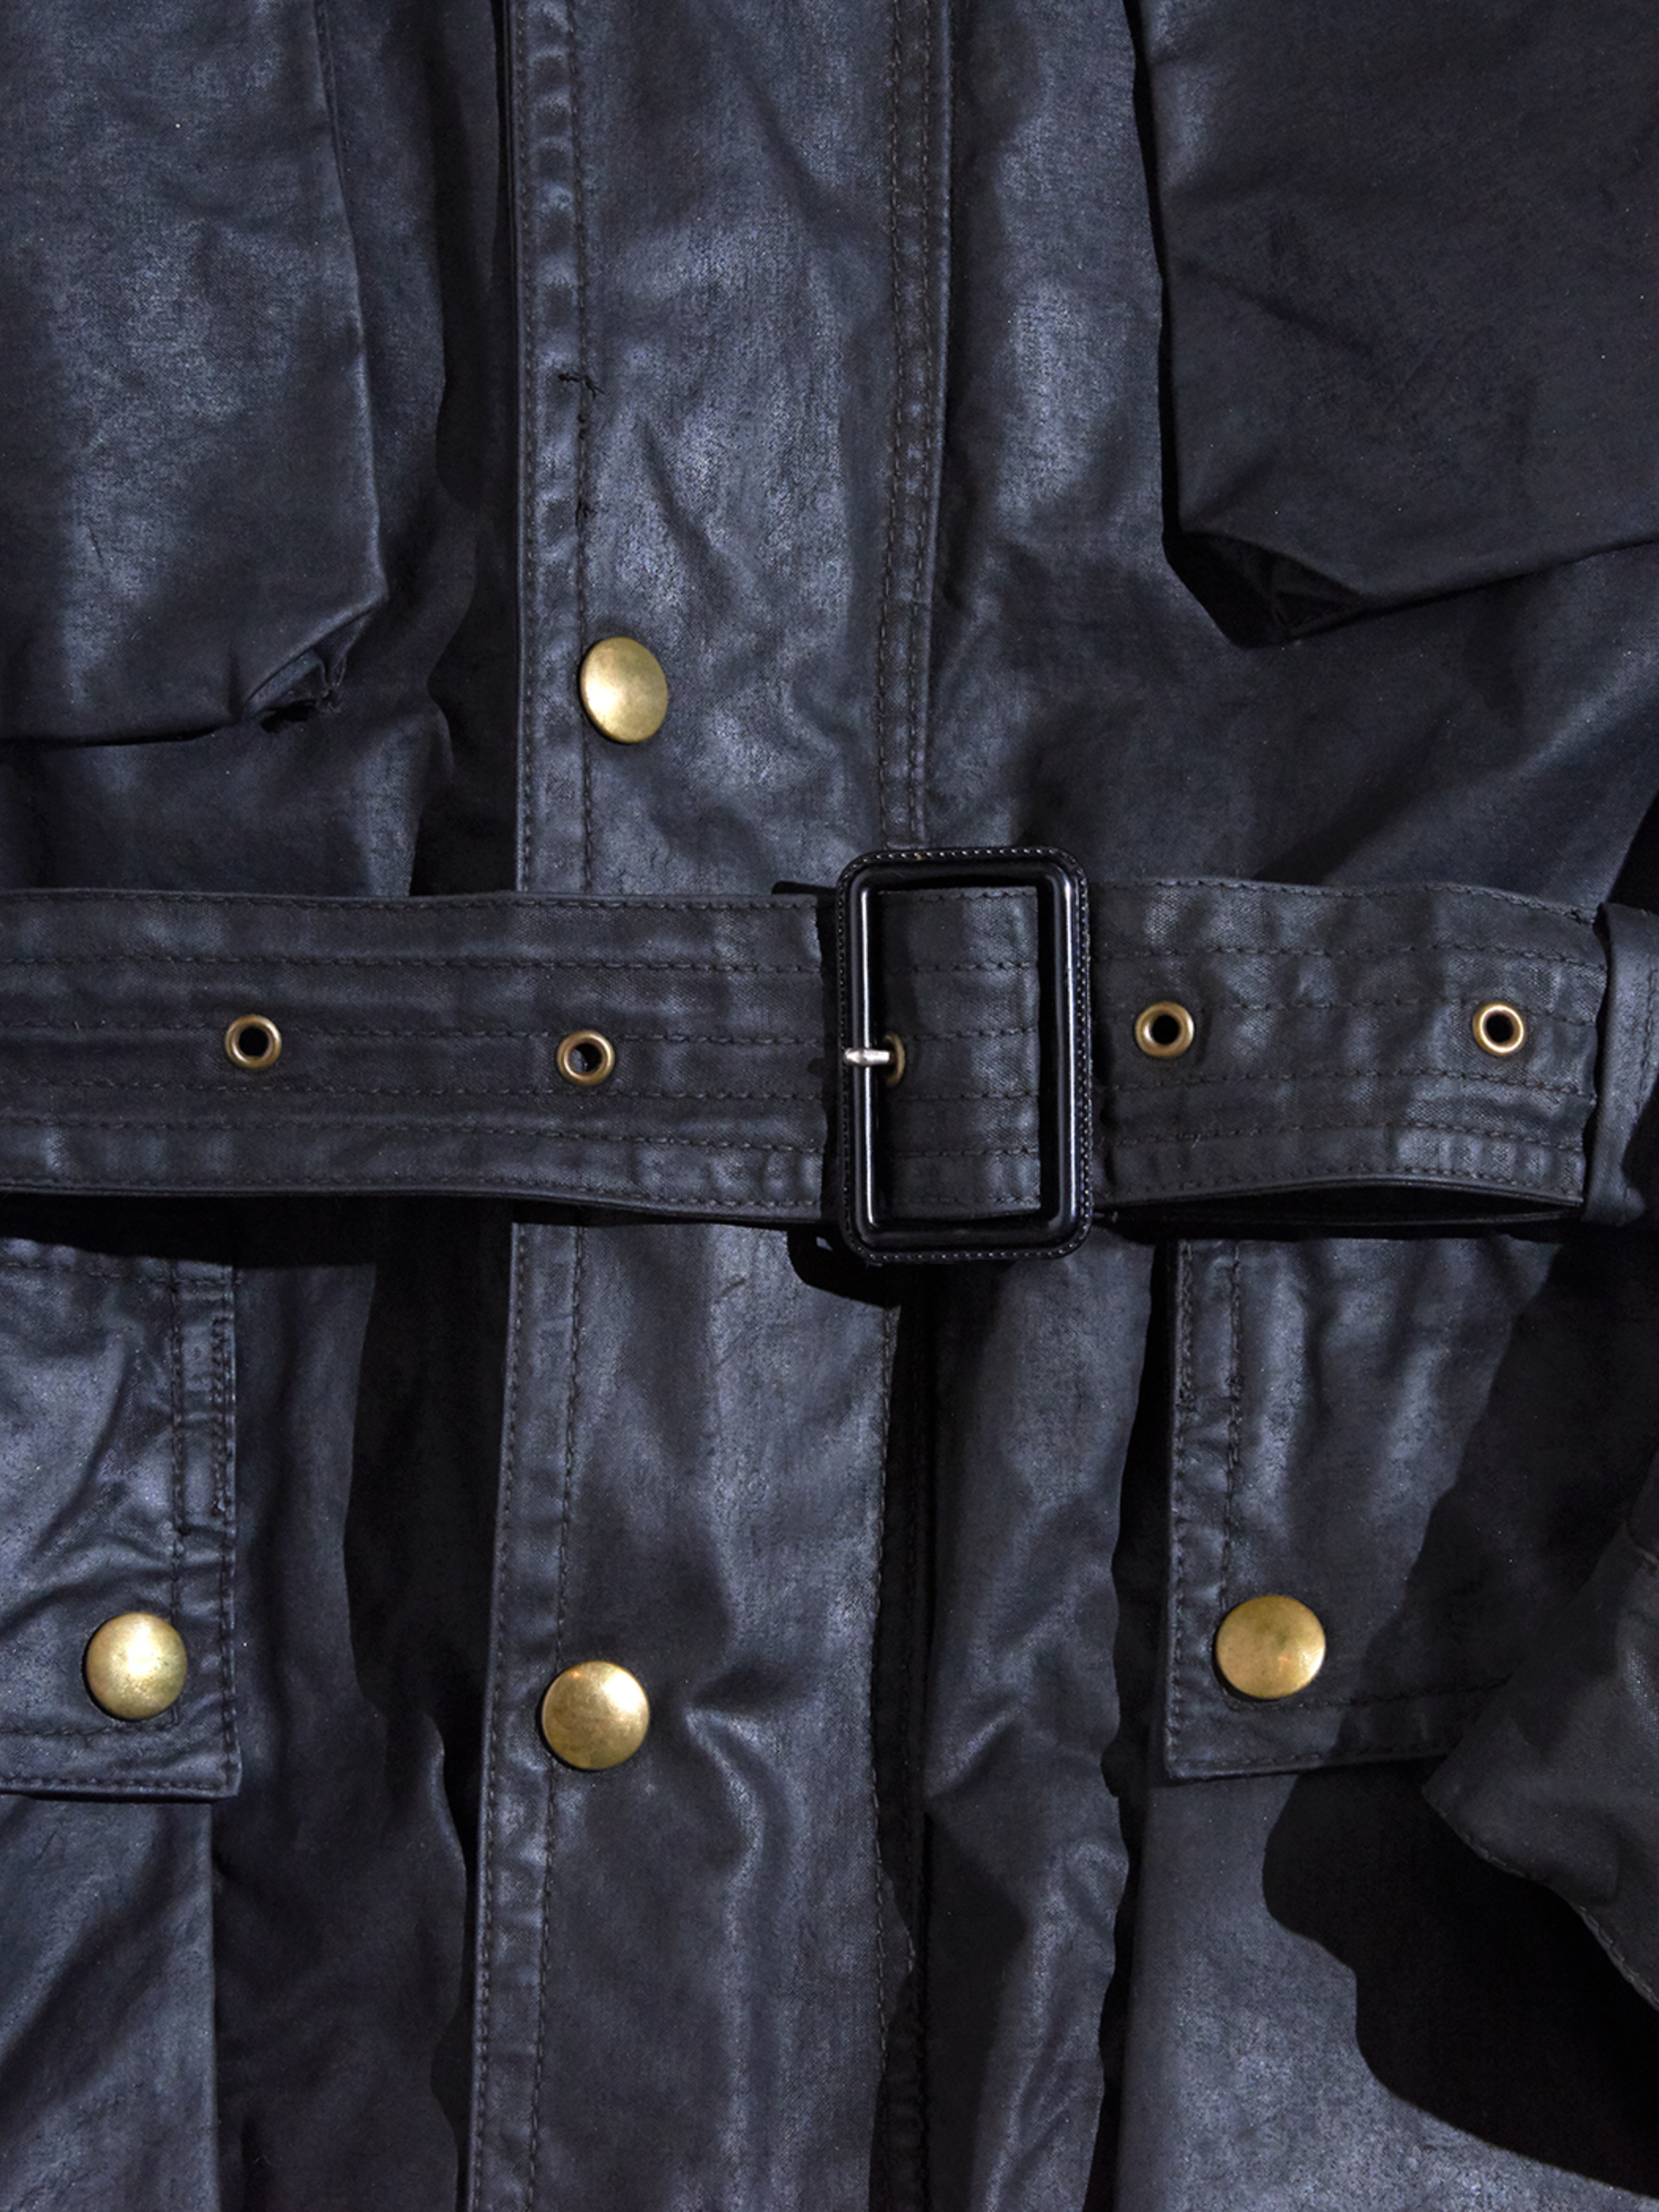 1960s "Belstaff" TRIALMASTER motorcycle oiled cloth jacket -BLACK-